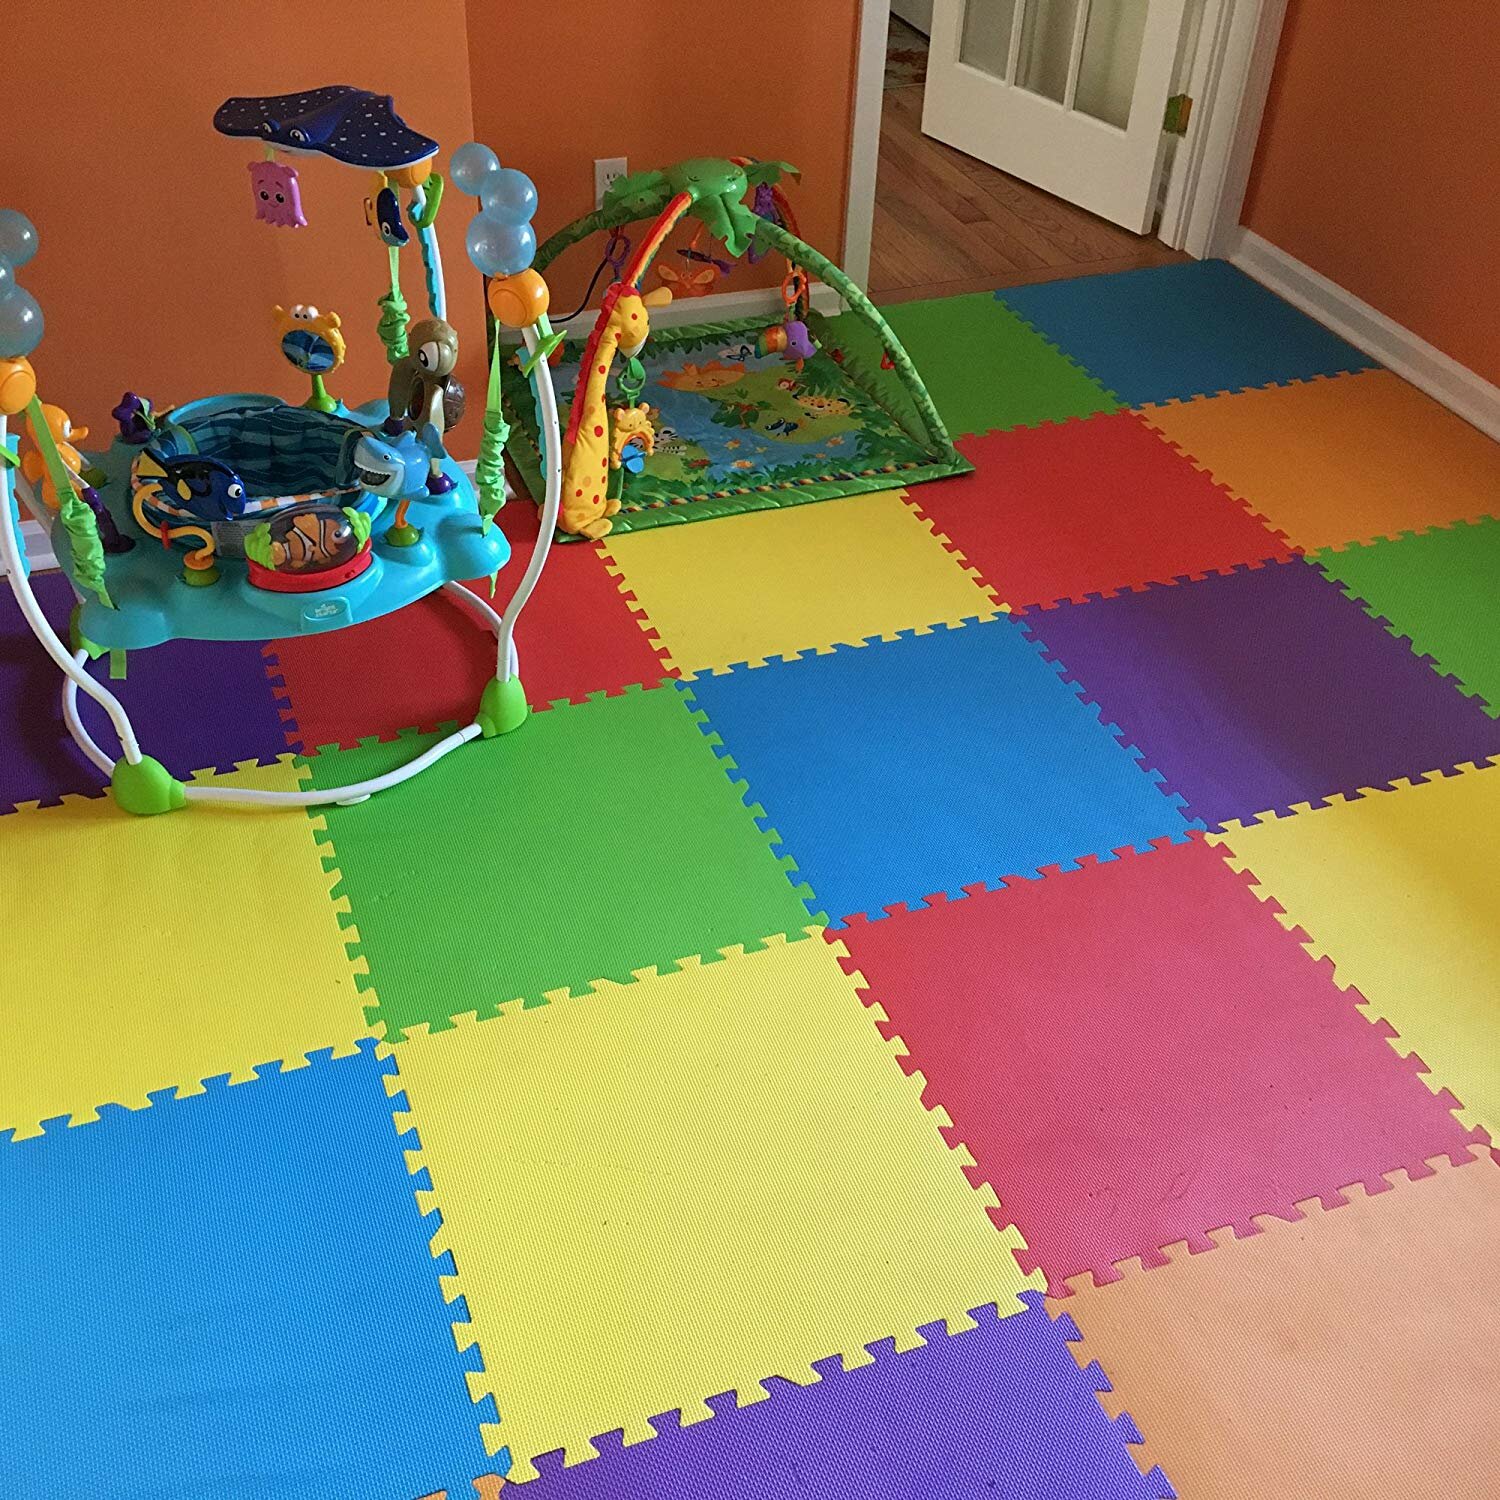 Soft Flooring for Kids Room - Interlocking DIY Bedroom Tiles